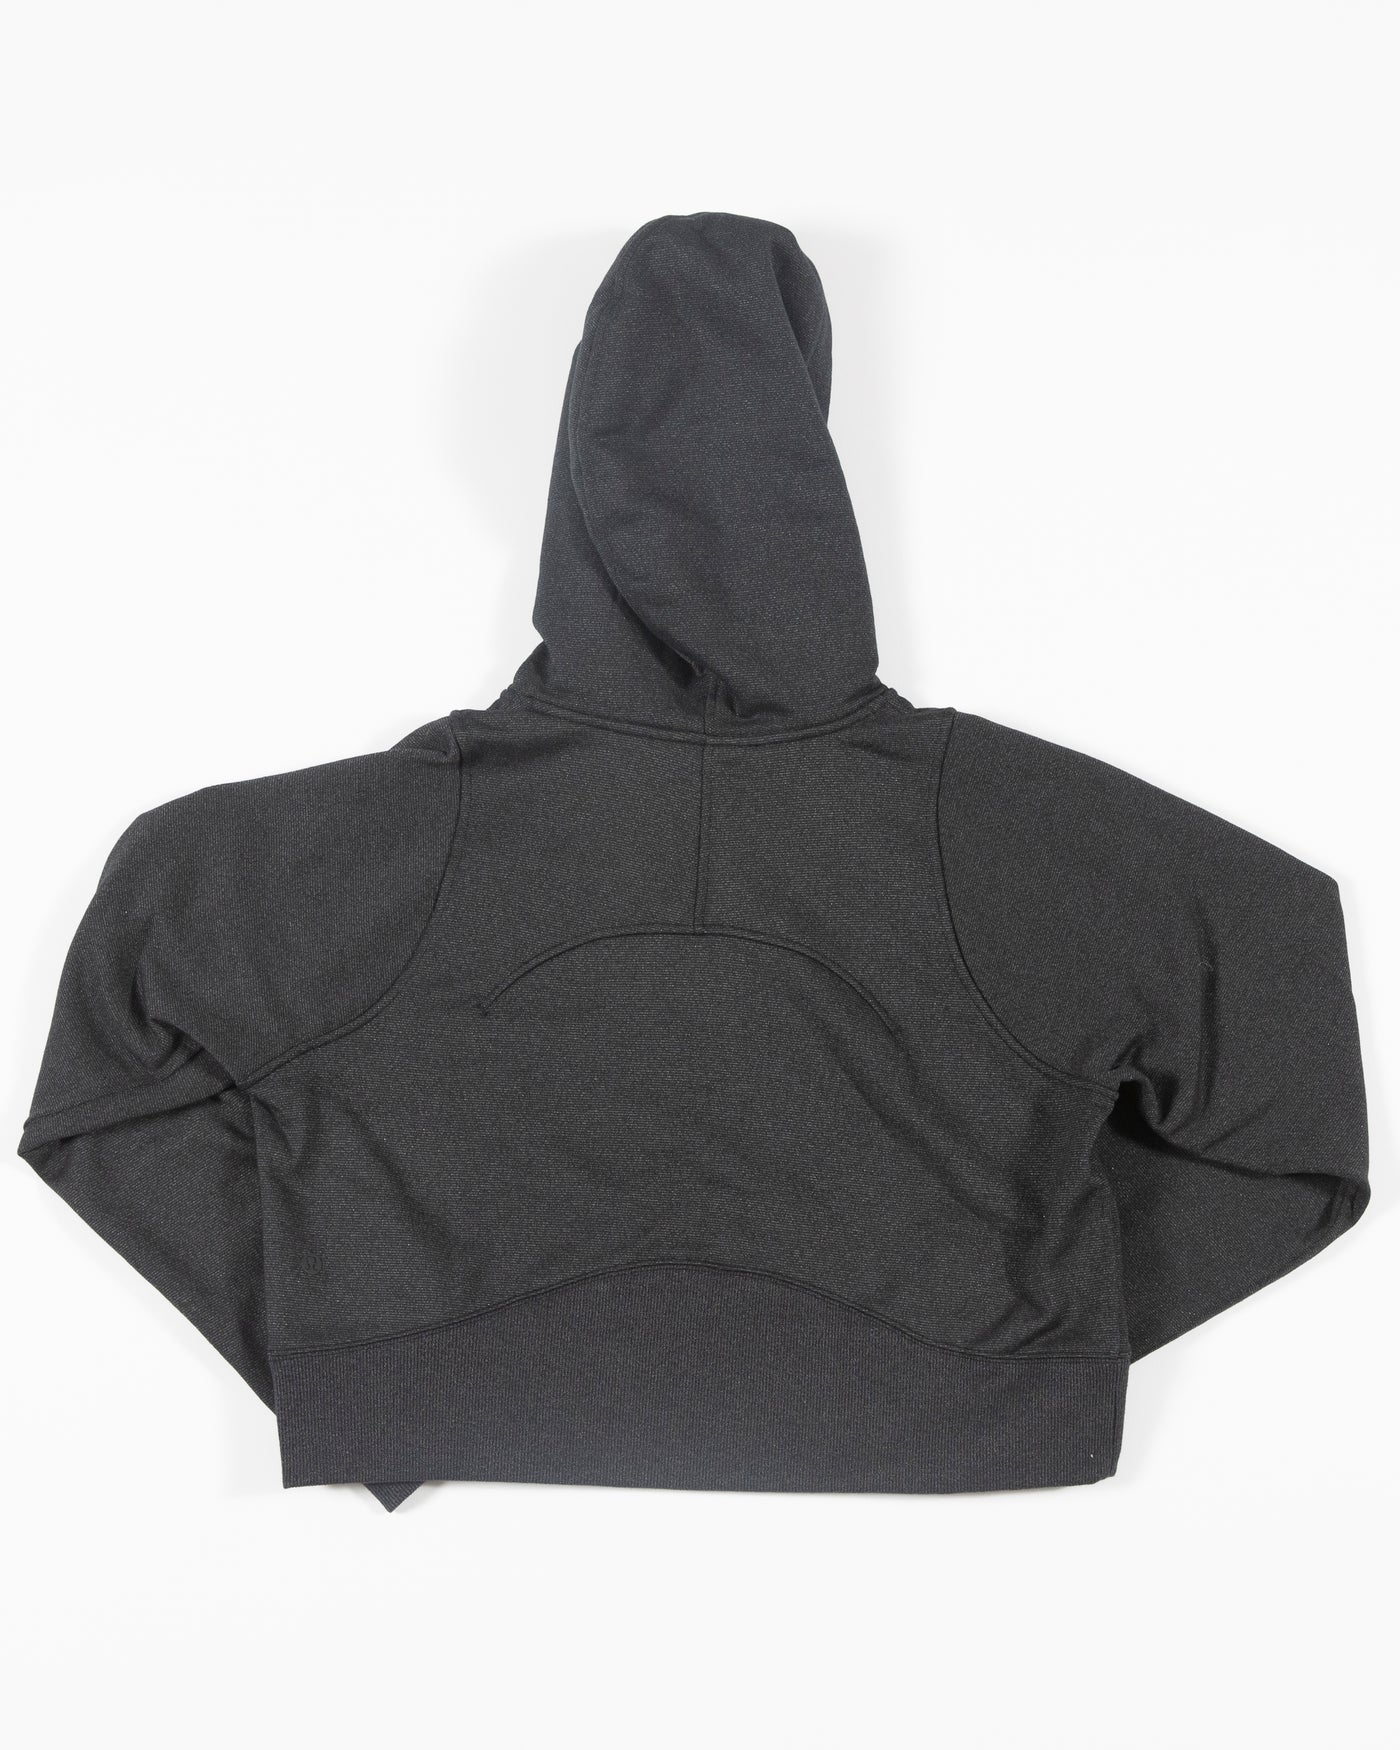 black cropped lululemon hoodie with tonal Chicago Blackhawks primary logo embroidered on left shoulder - back lay flat